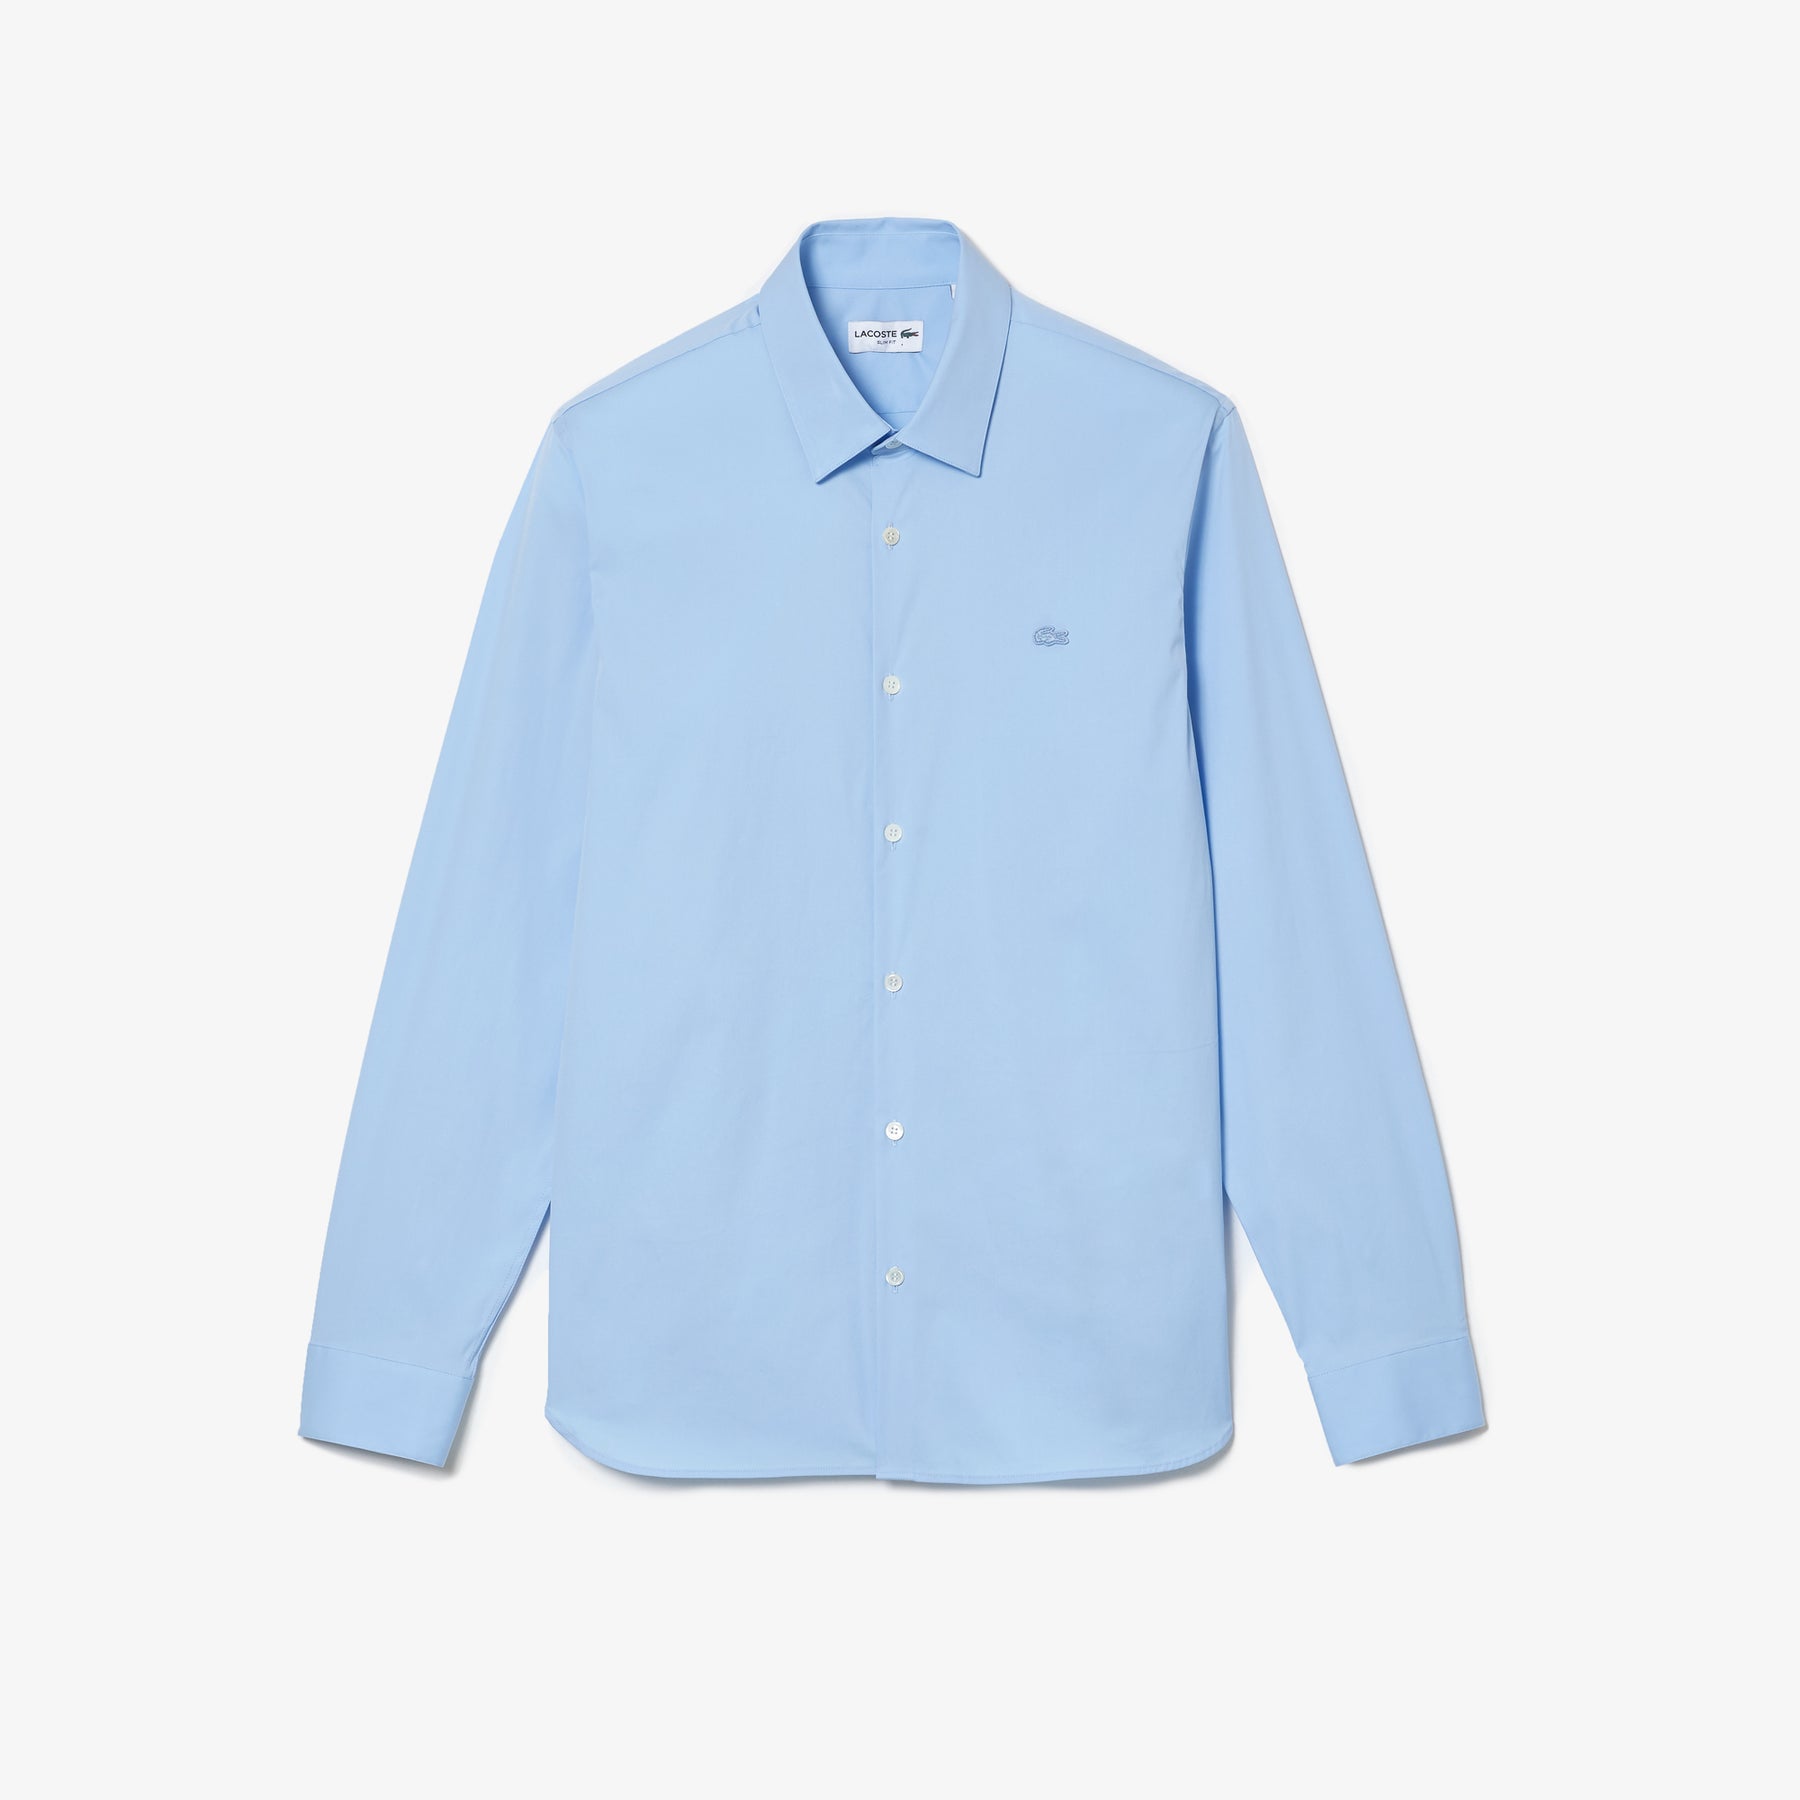 LACOSTE - Men's Lacoste Slim Fit French Collar Cotton Poplin Shirt - CH5253